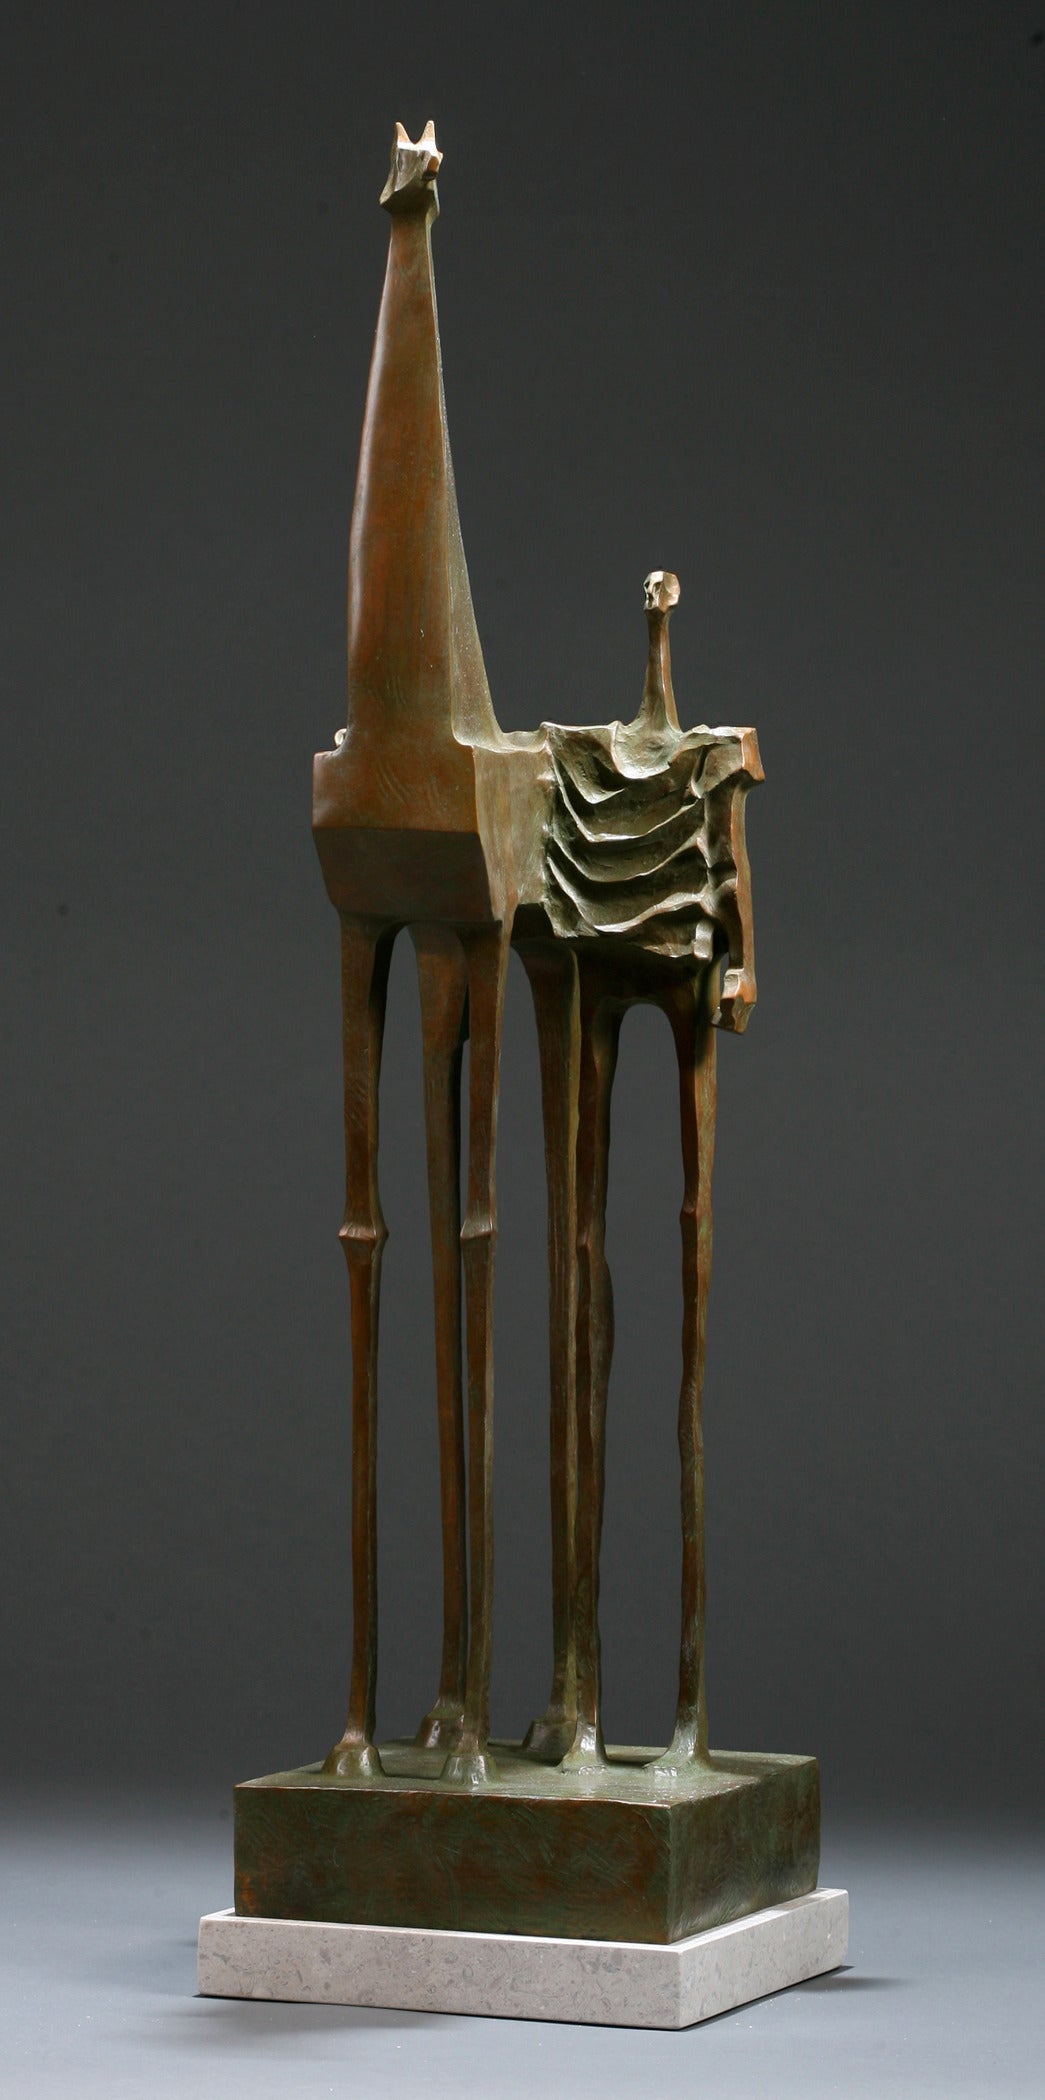 Wayne Salge Figurative Sculpture - "Zeke & Zach 11/18" Abstract Figurative Bronze sculpture of a man and horse